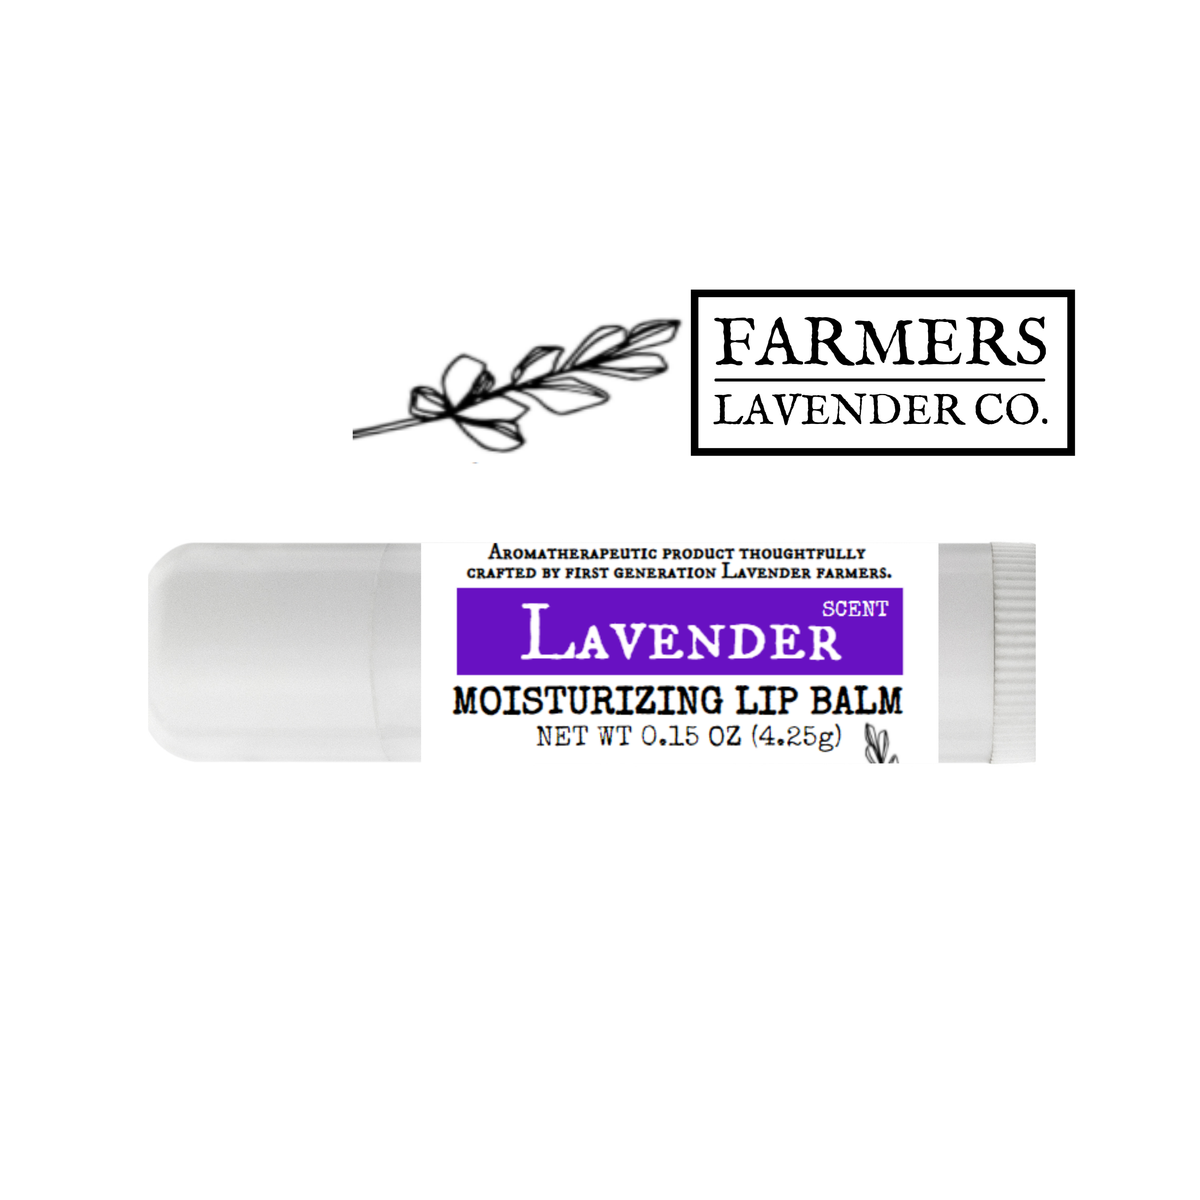 FARMERS Lavender Co. - Lavender Lip Balm